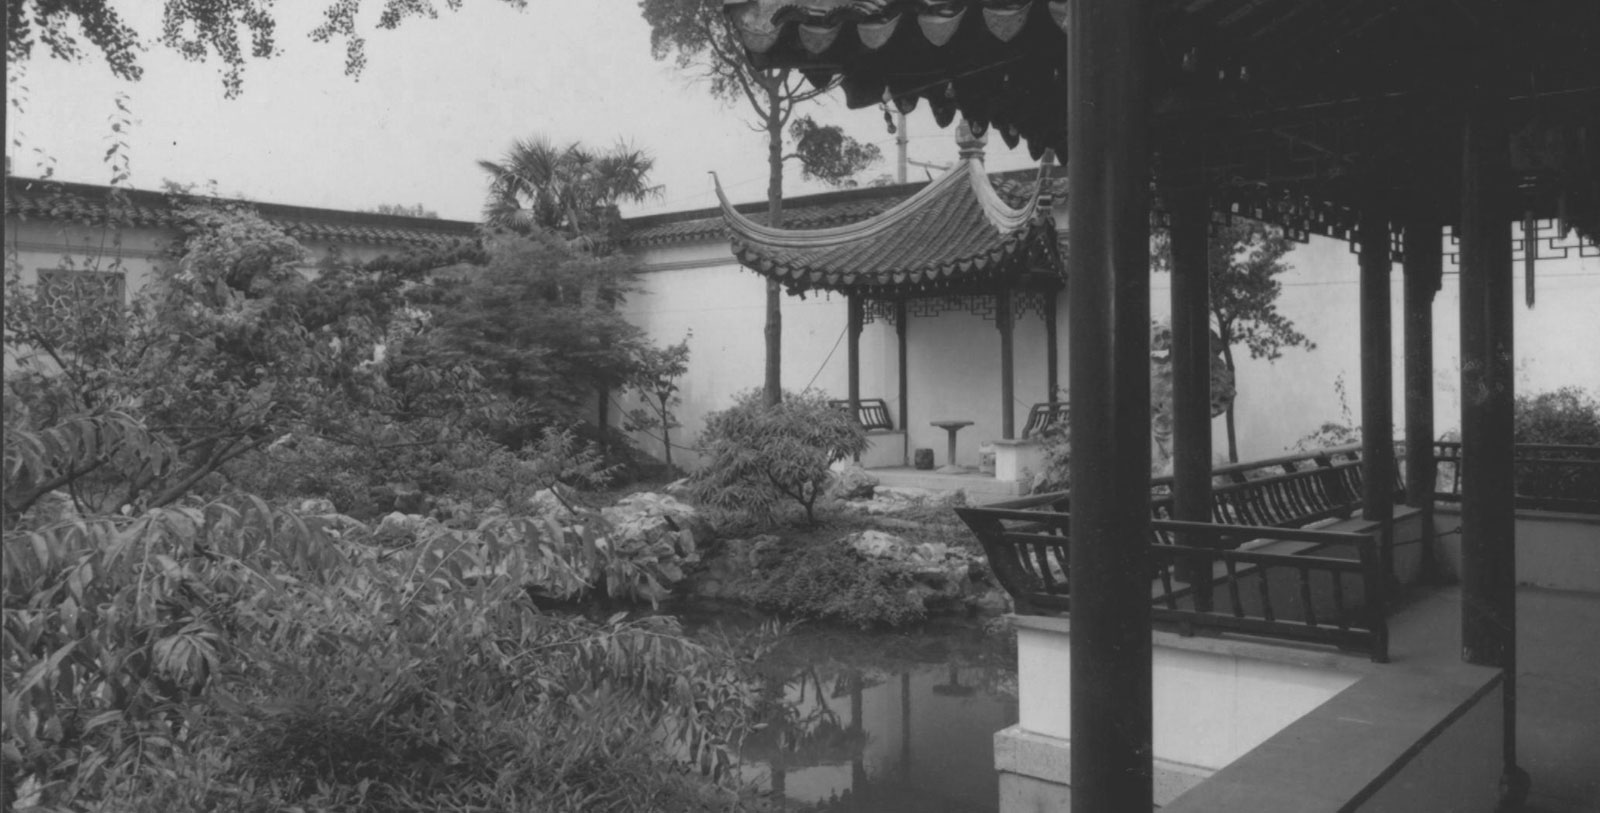 Discover the traditional architecture of Garden Hotel Suzhou’s Classical Suzhou Garden.